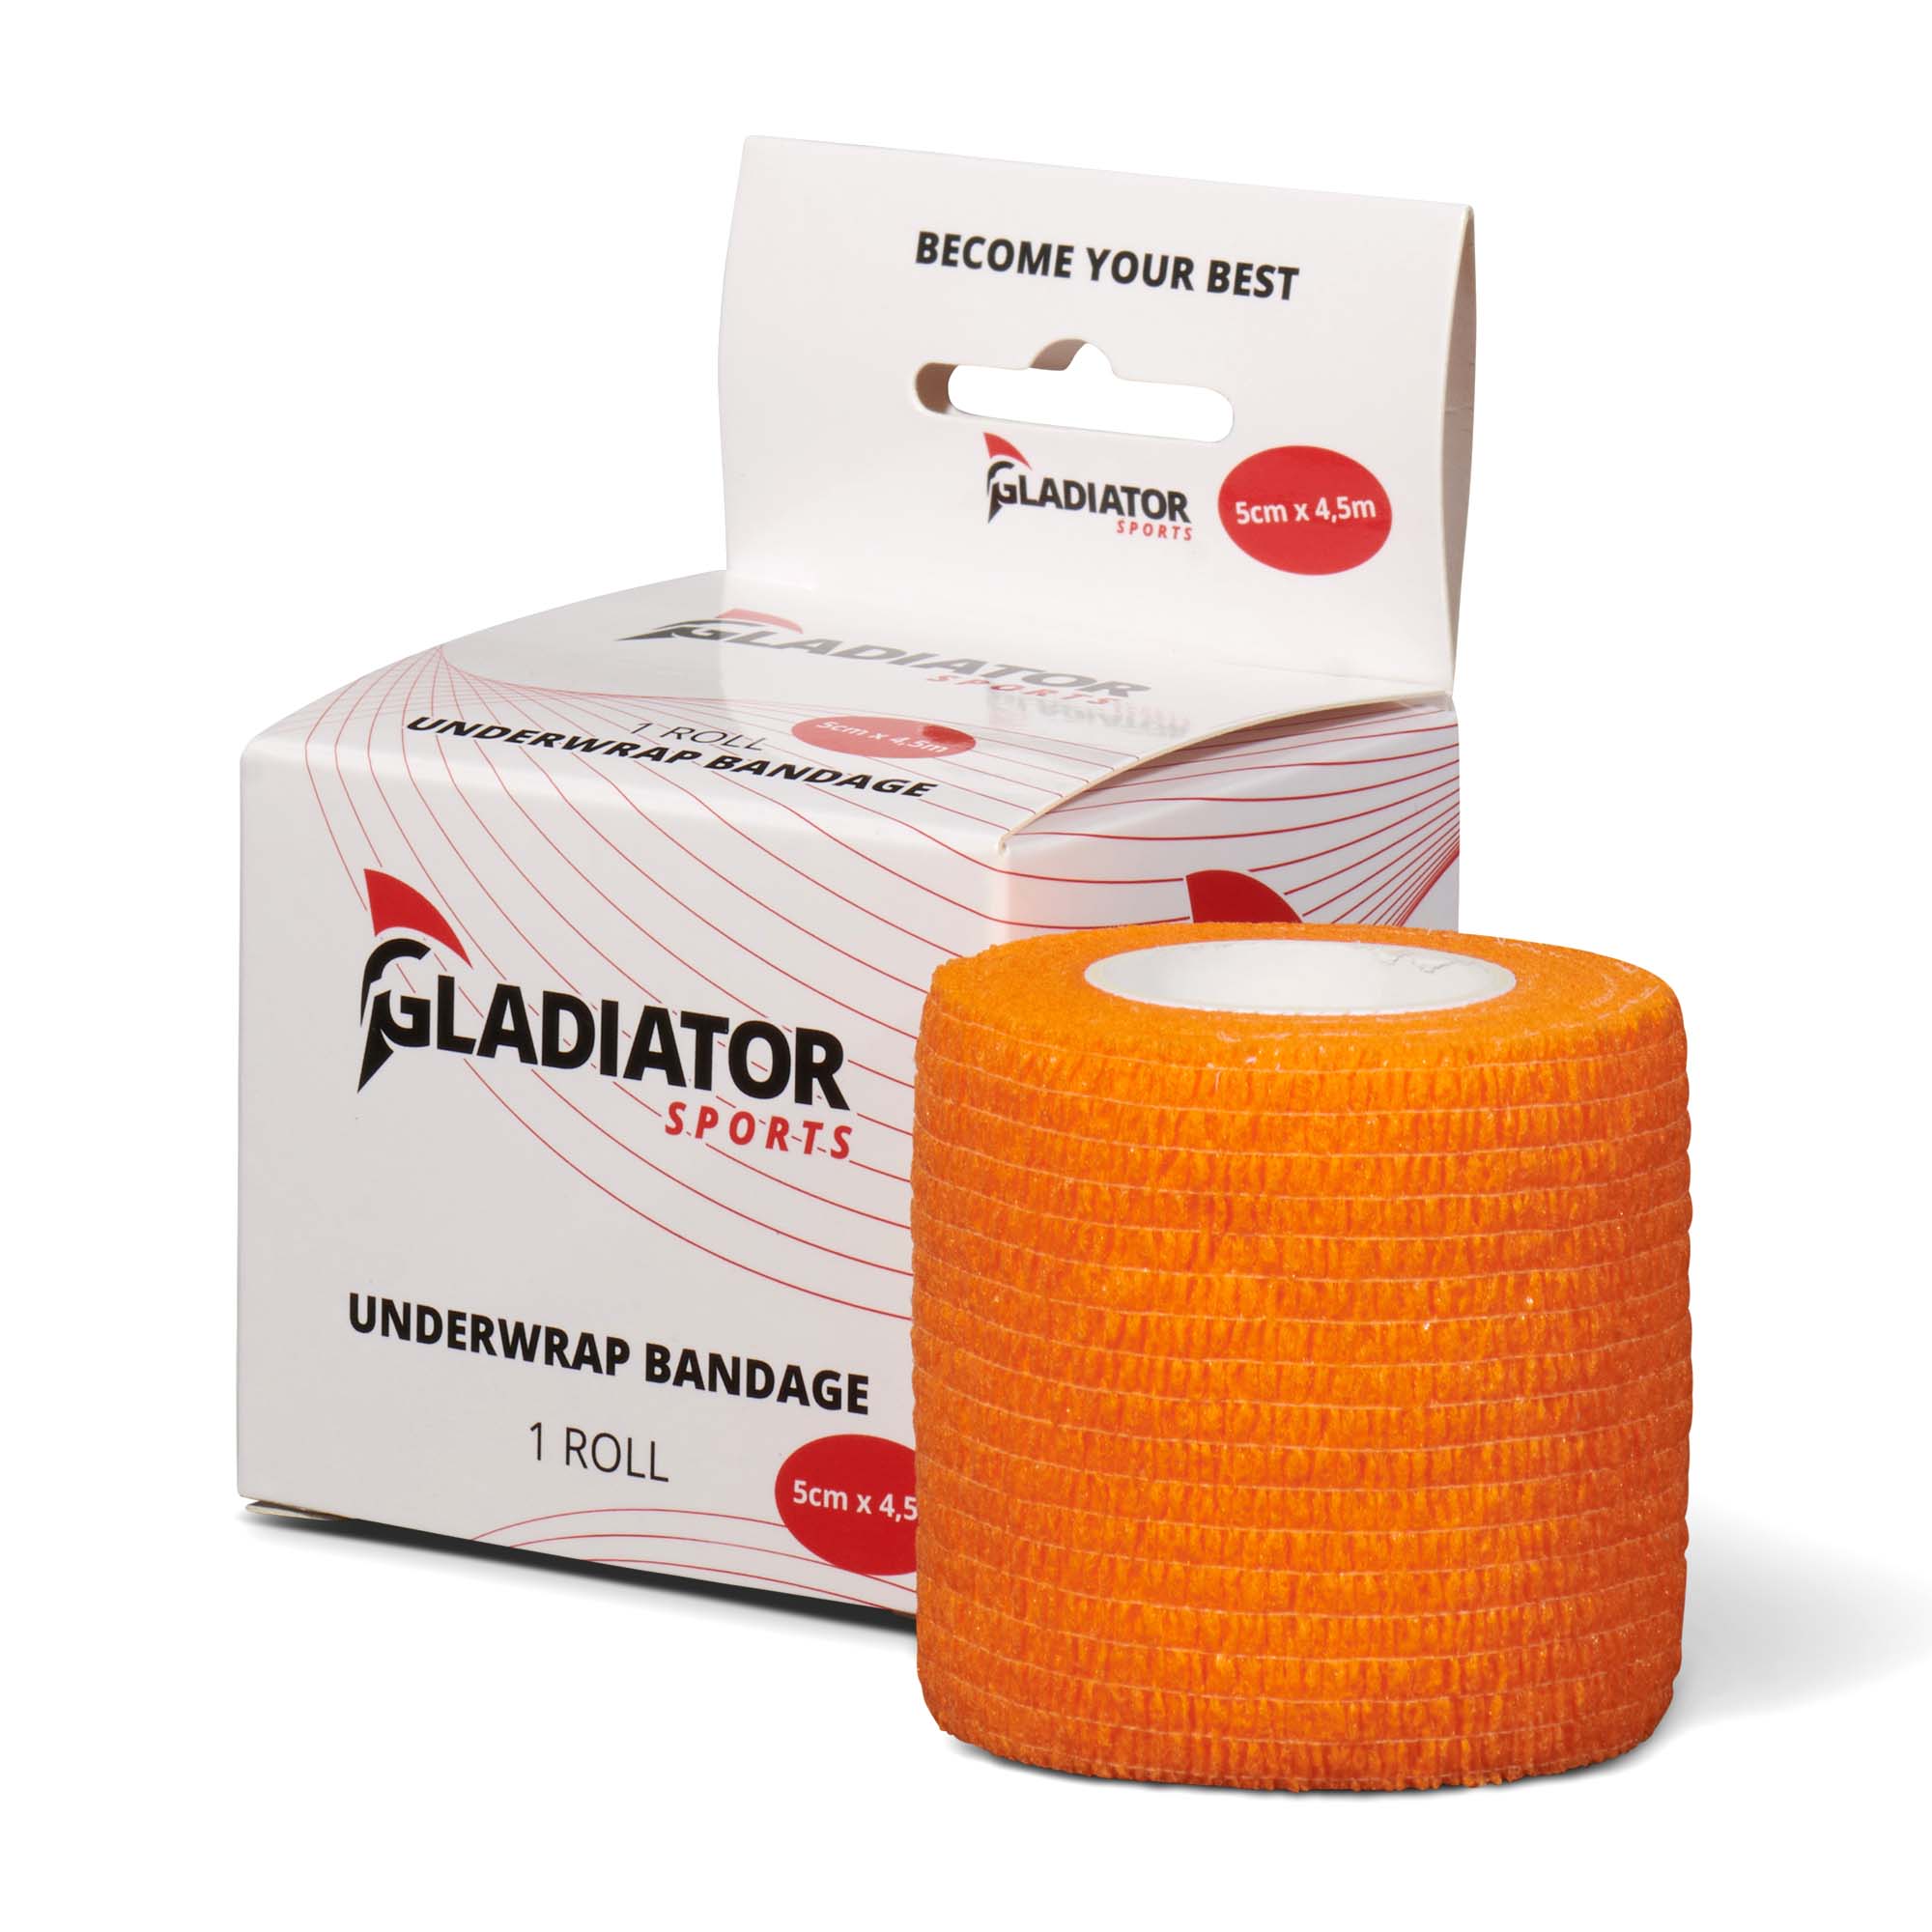 gladiator sports underwrap bandage per roll orange with box